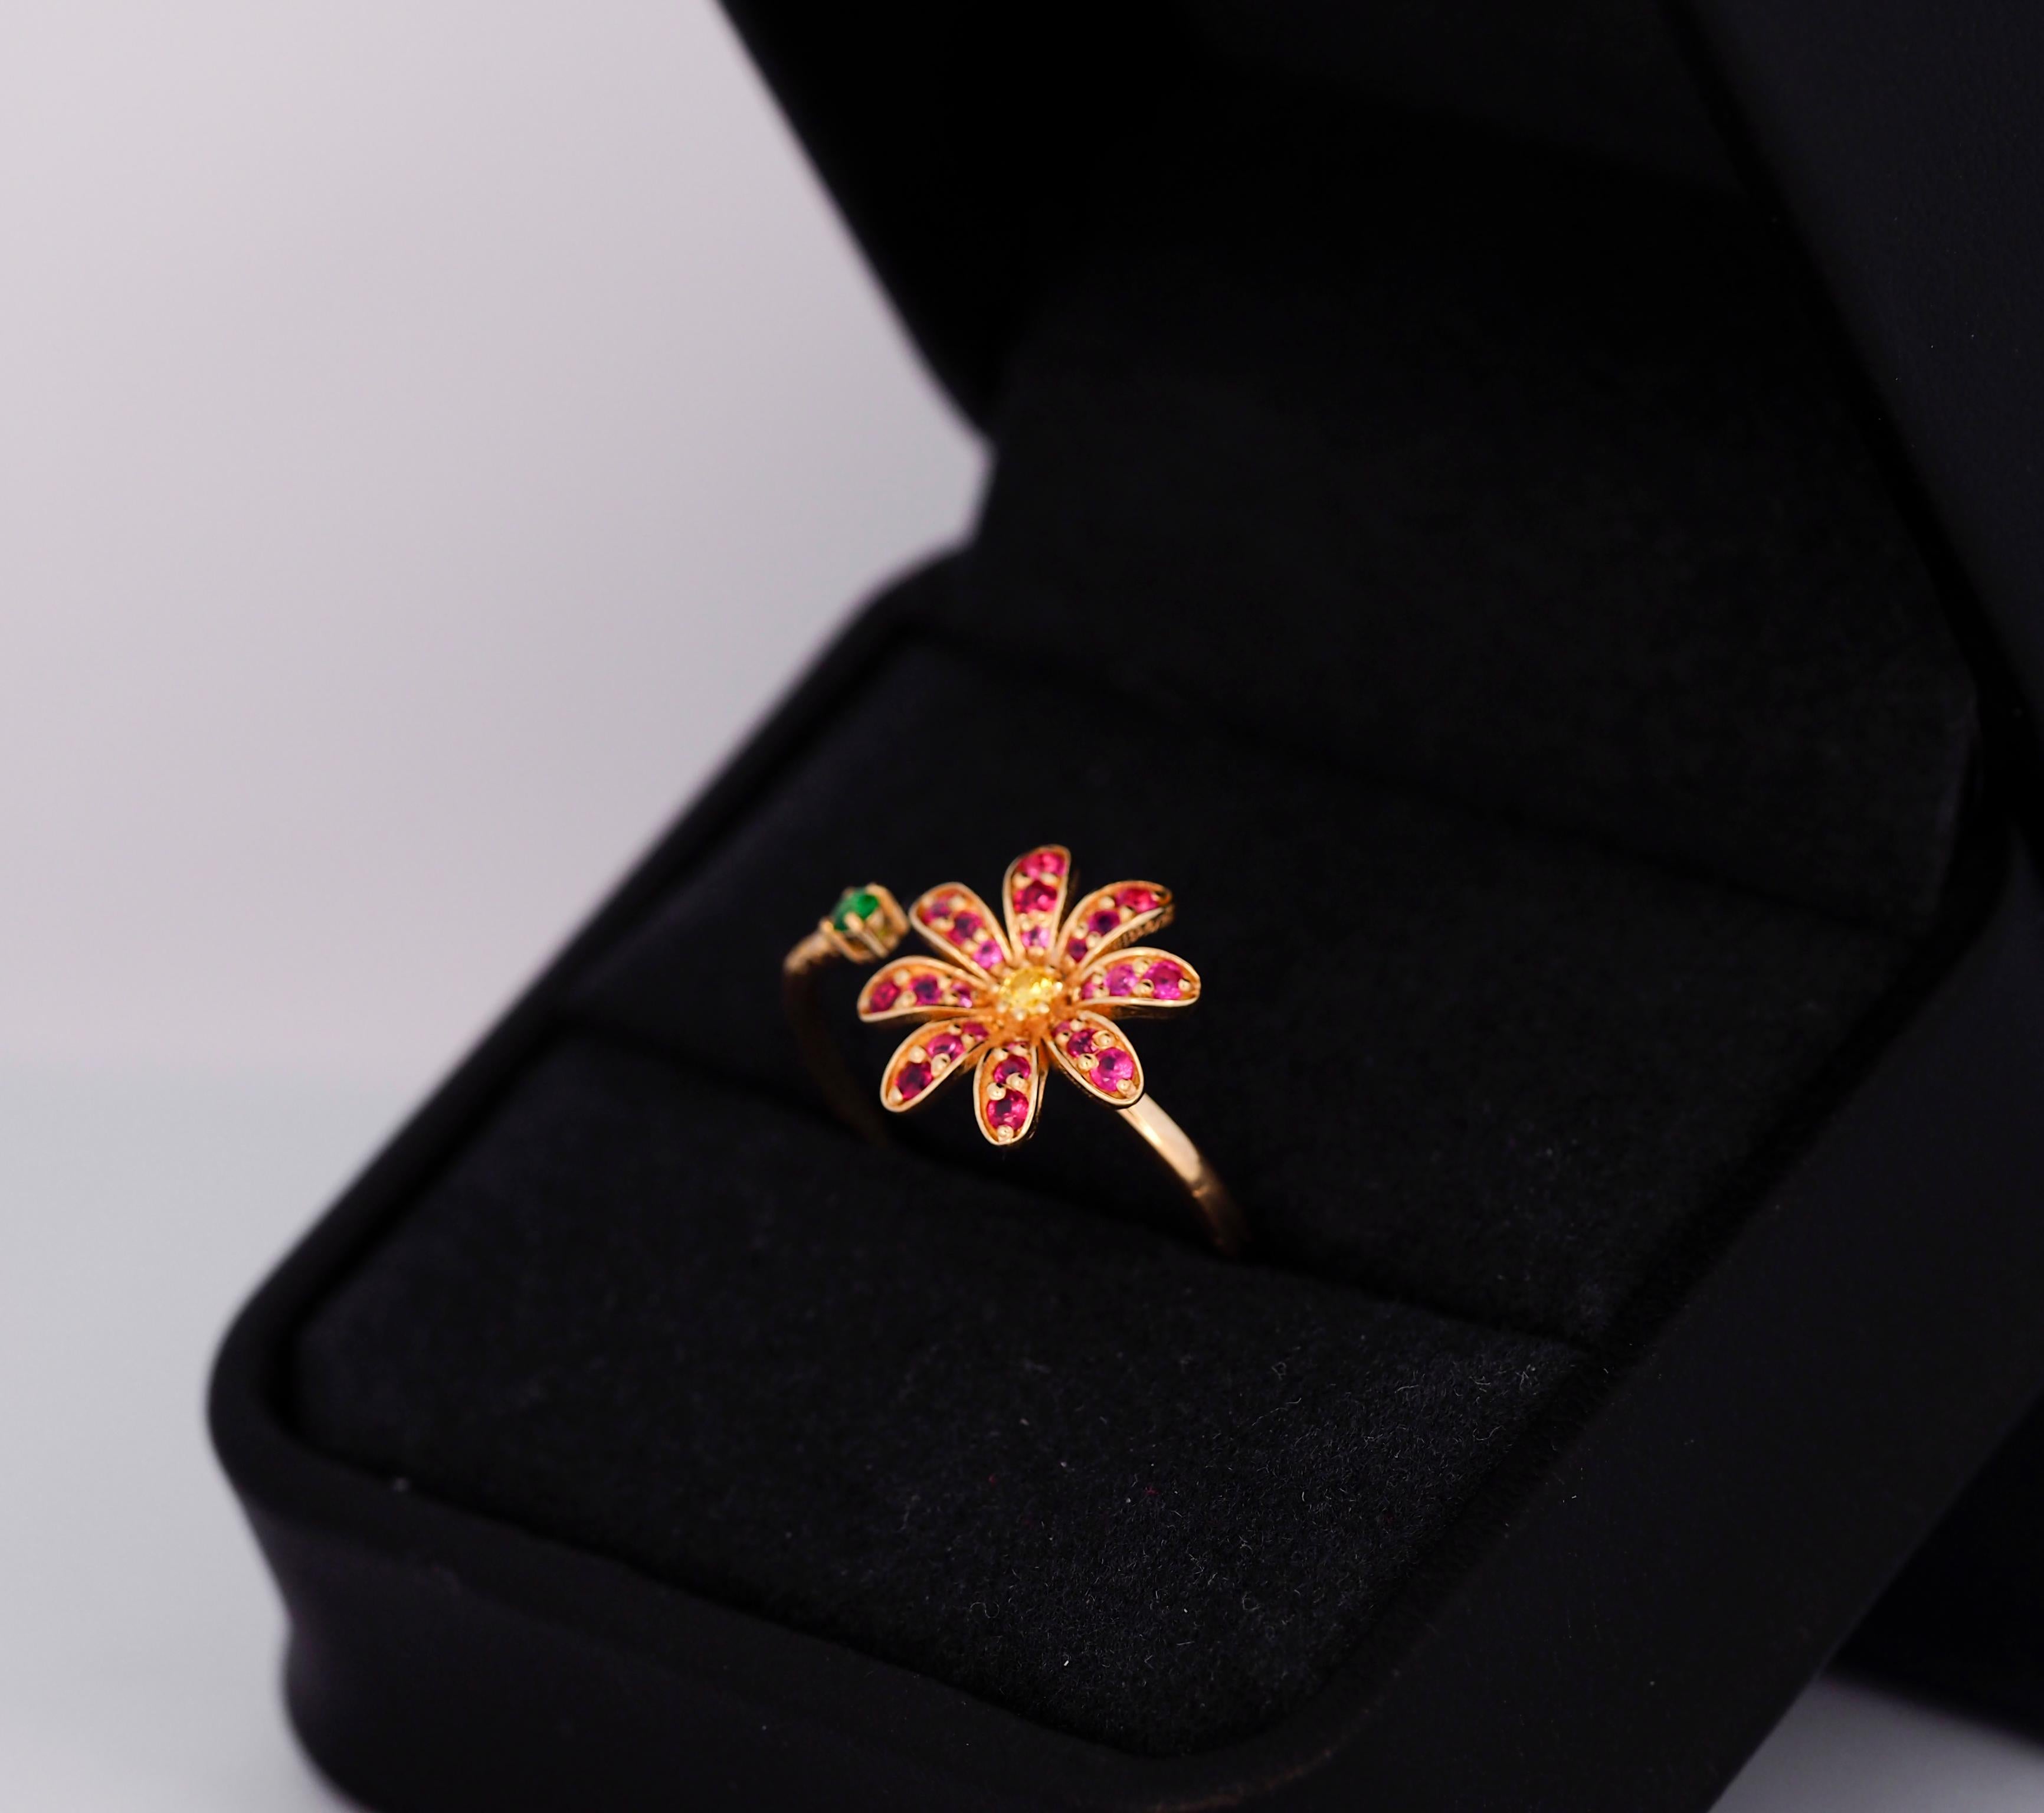 For Sale:  Open ended flower ring in 14k gold.  2